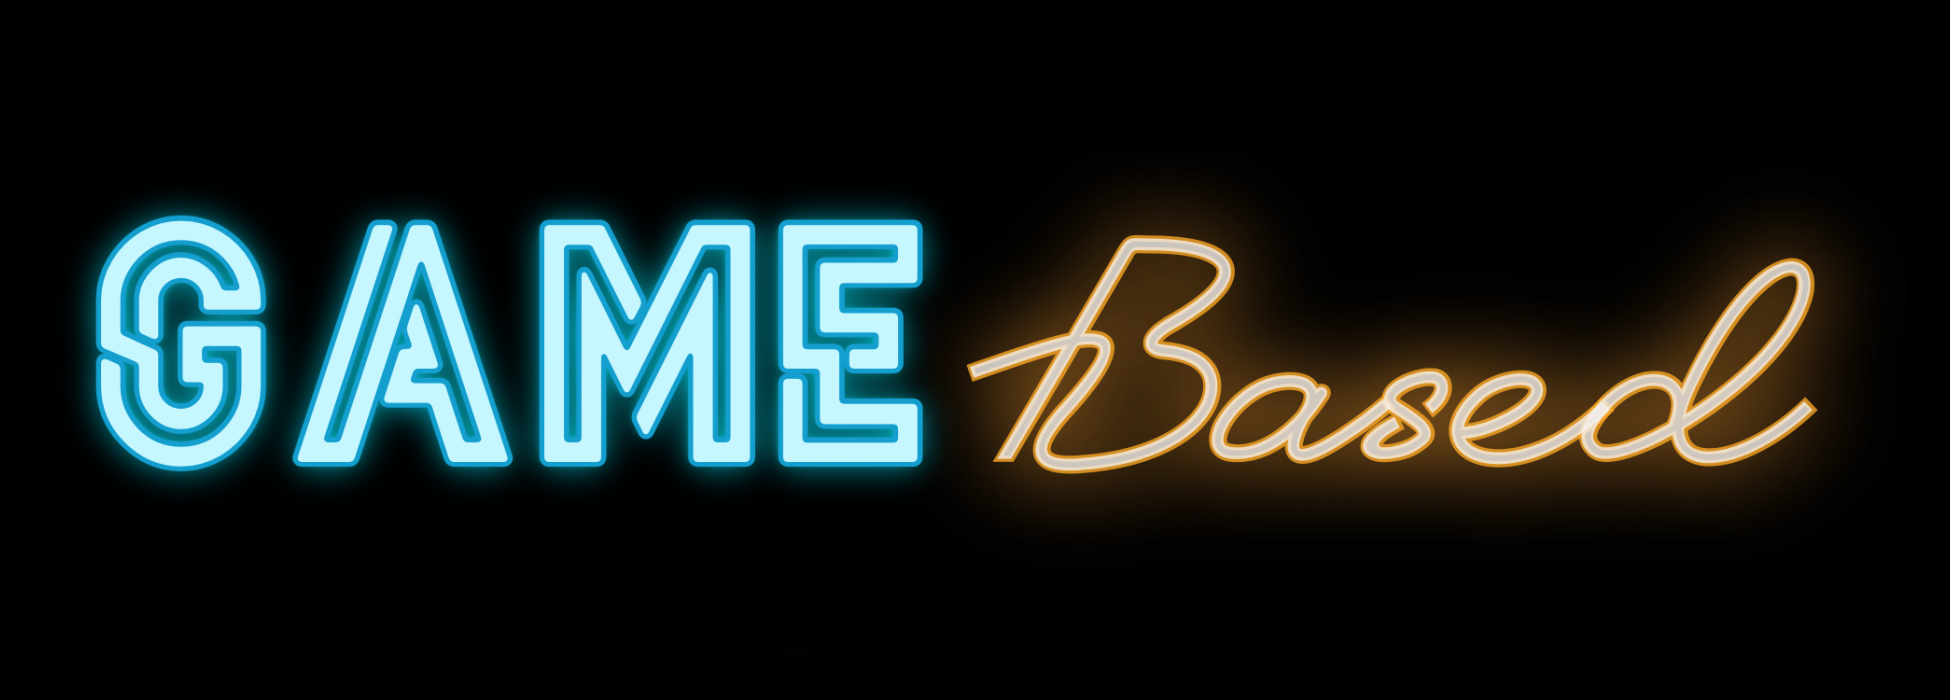 Neon-Schriftzug "Game Based"